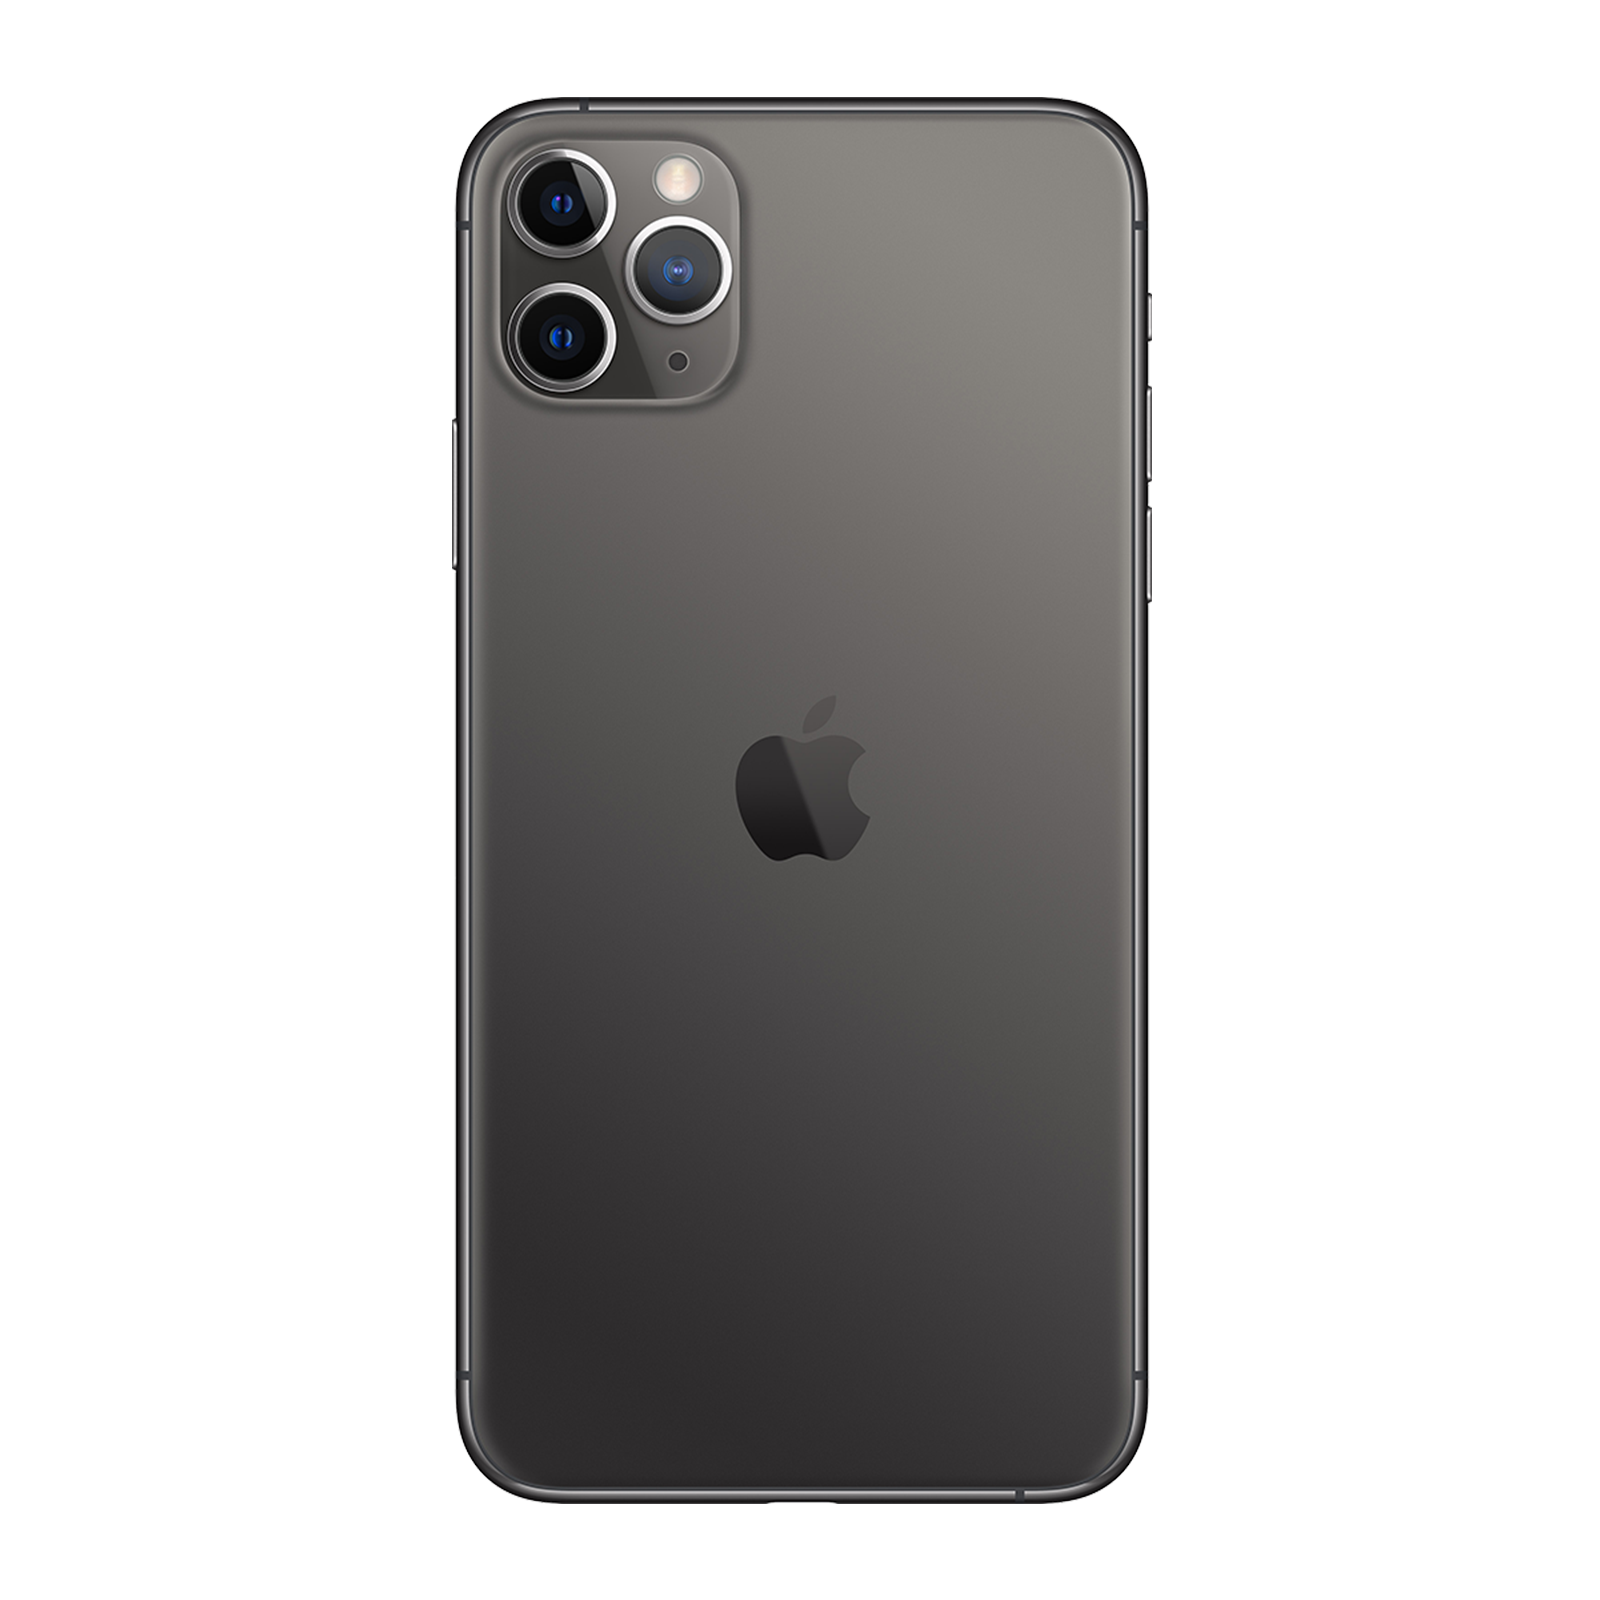 Apple iPhone 11 Pro 256GB Green Fair AT&T – Loop Mobile - US